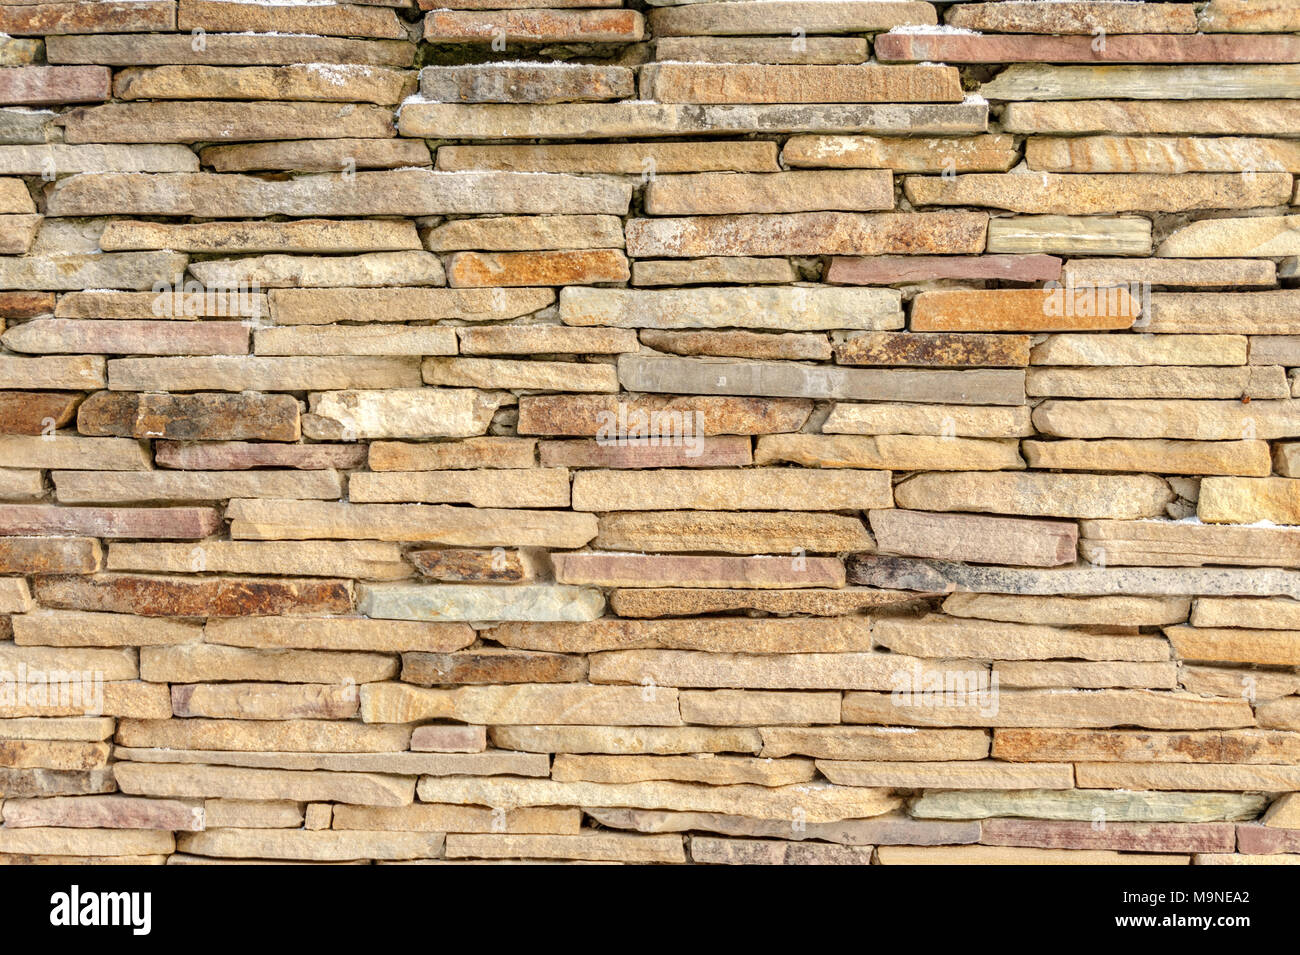 Sandstone brick stone wall texture background Stock Photo - Alamy